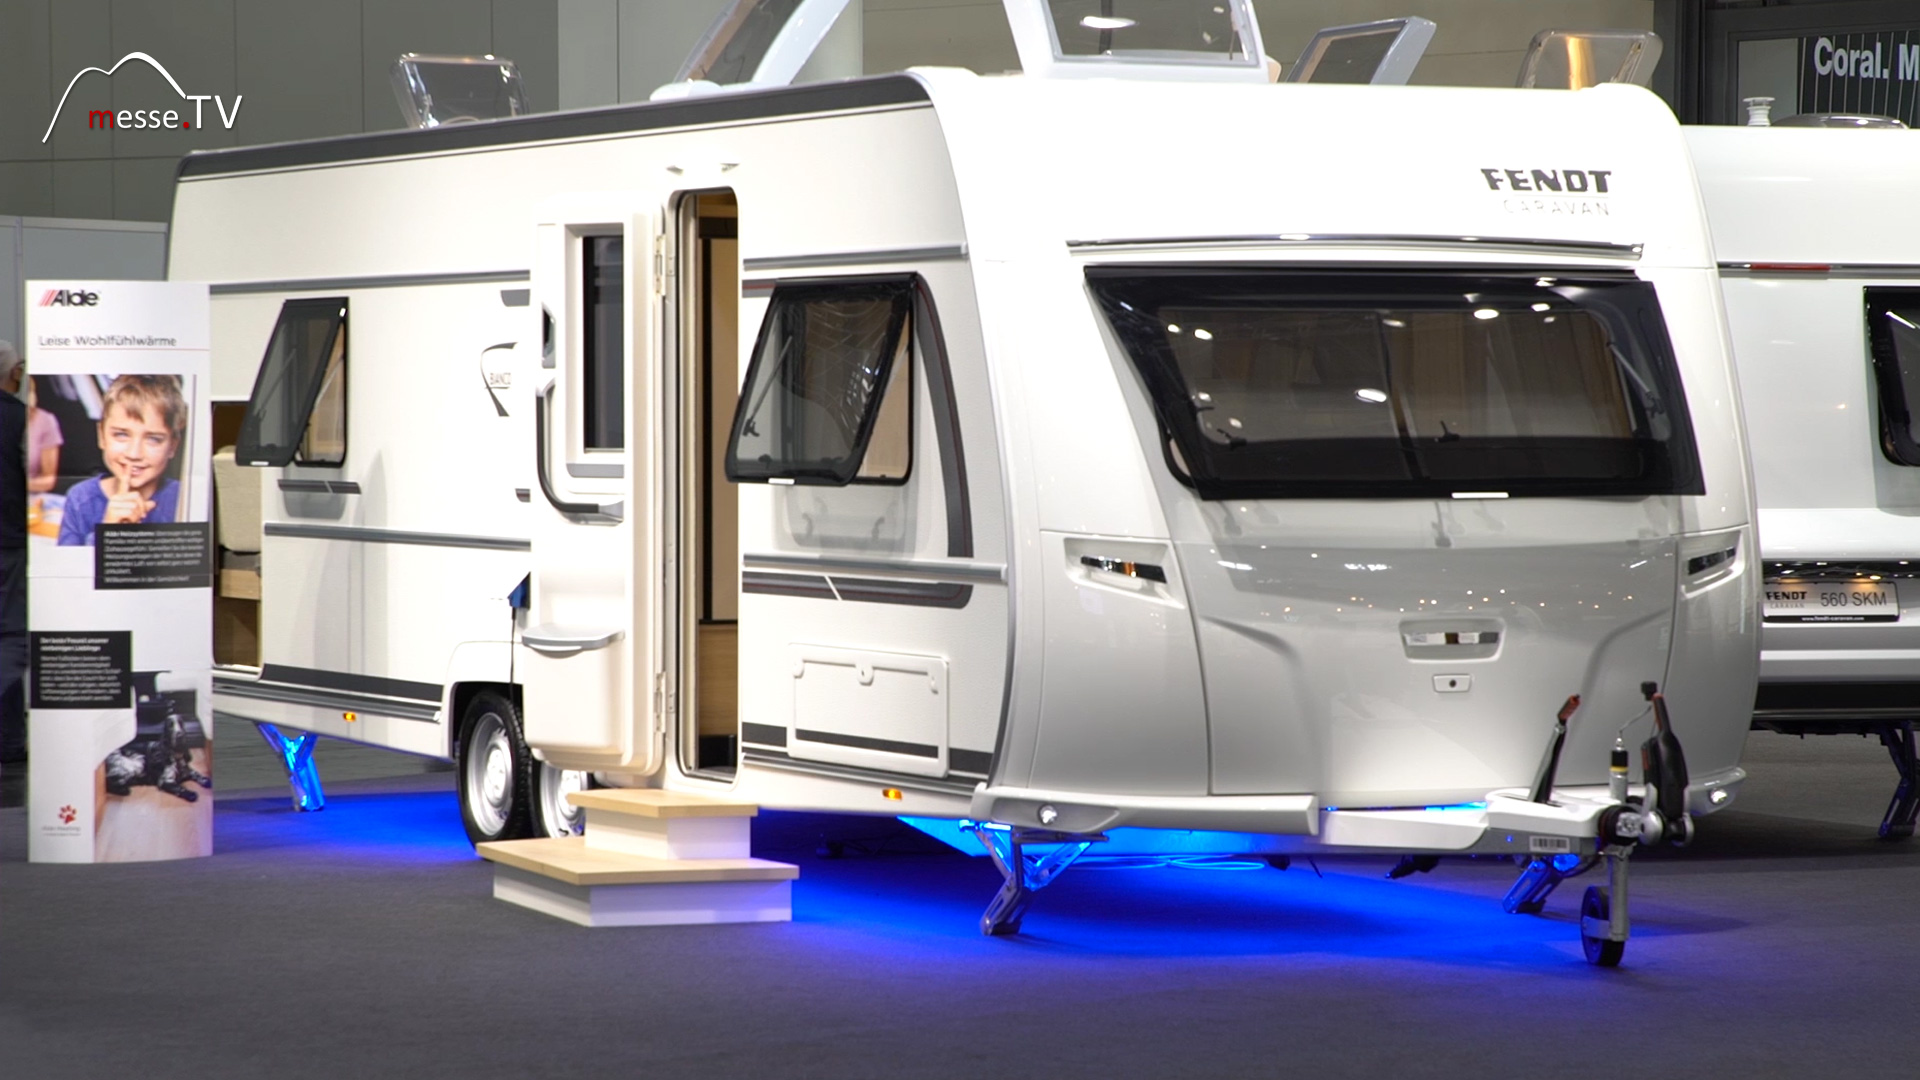 Wohnwagen Bianco aktiv Fendt Caravan Caravan Salon 2020 Duesseldorf